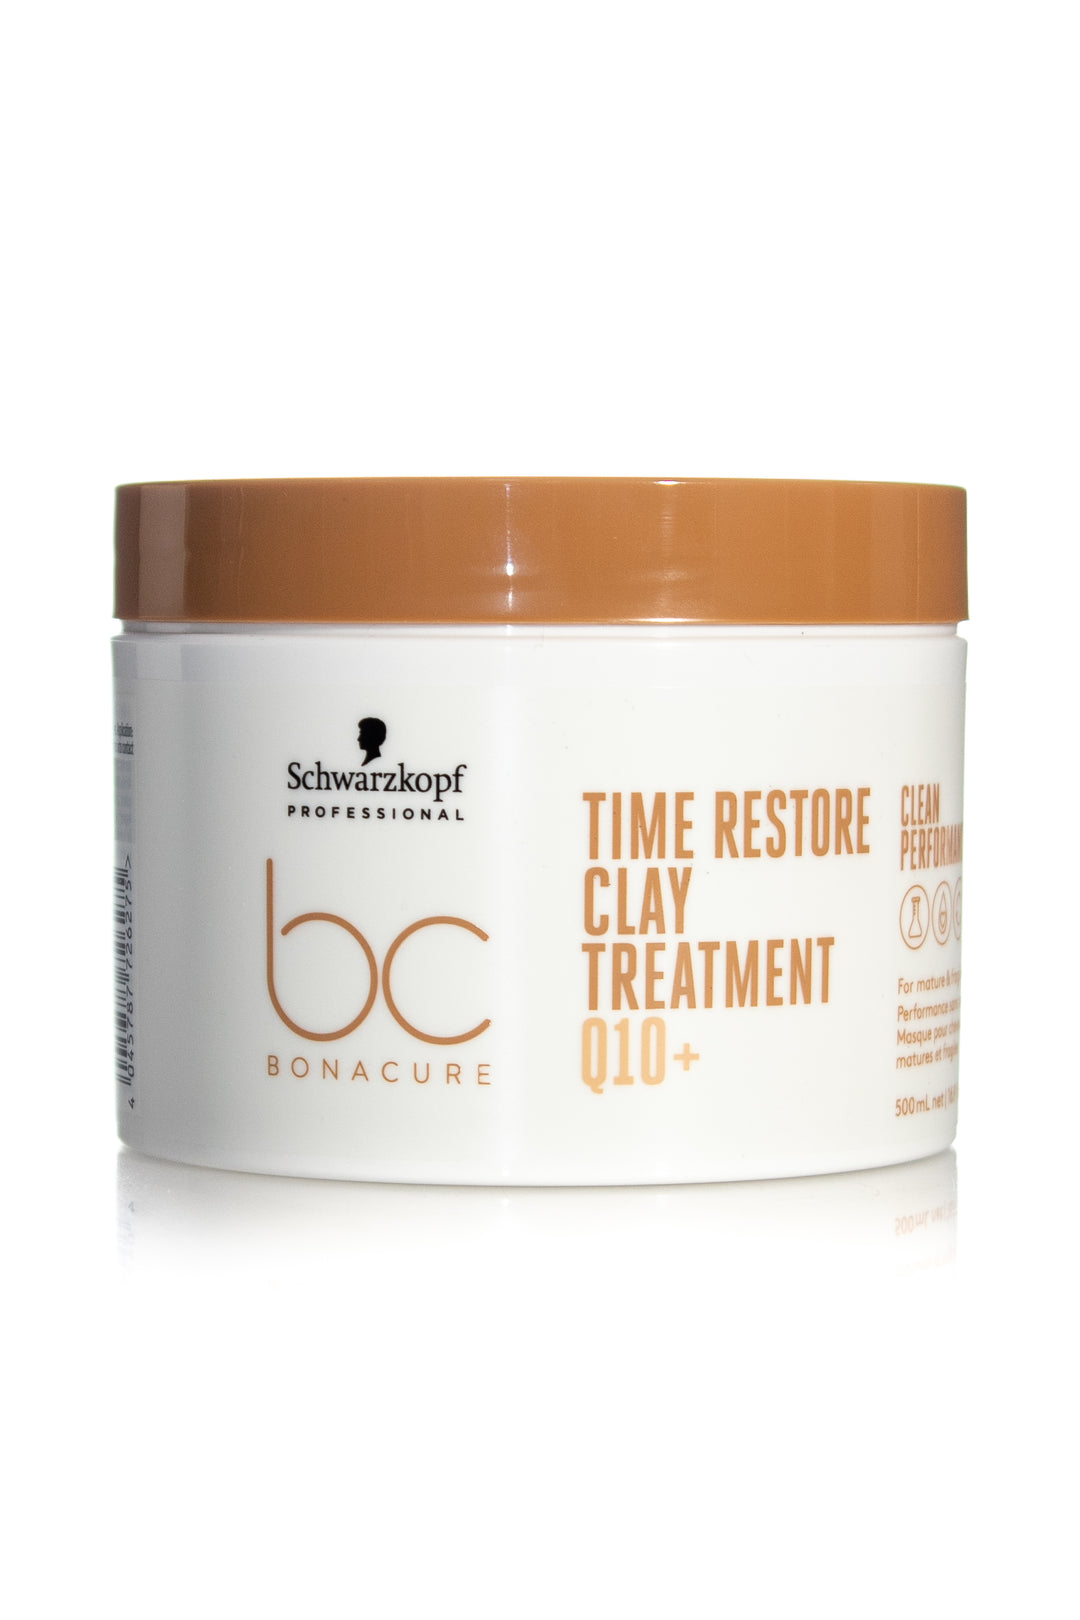 SCHWARZKOPF Bonacure Time Restore Clay Treatment Q10+ | Various Sizes